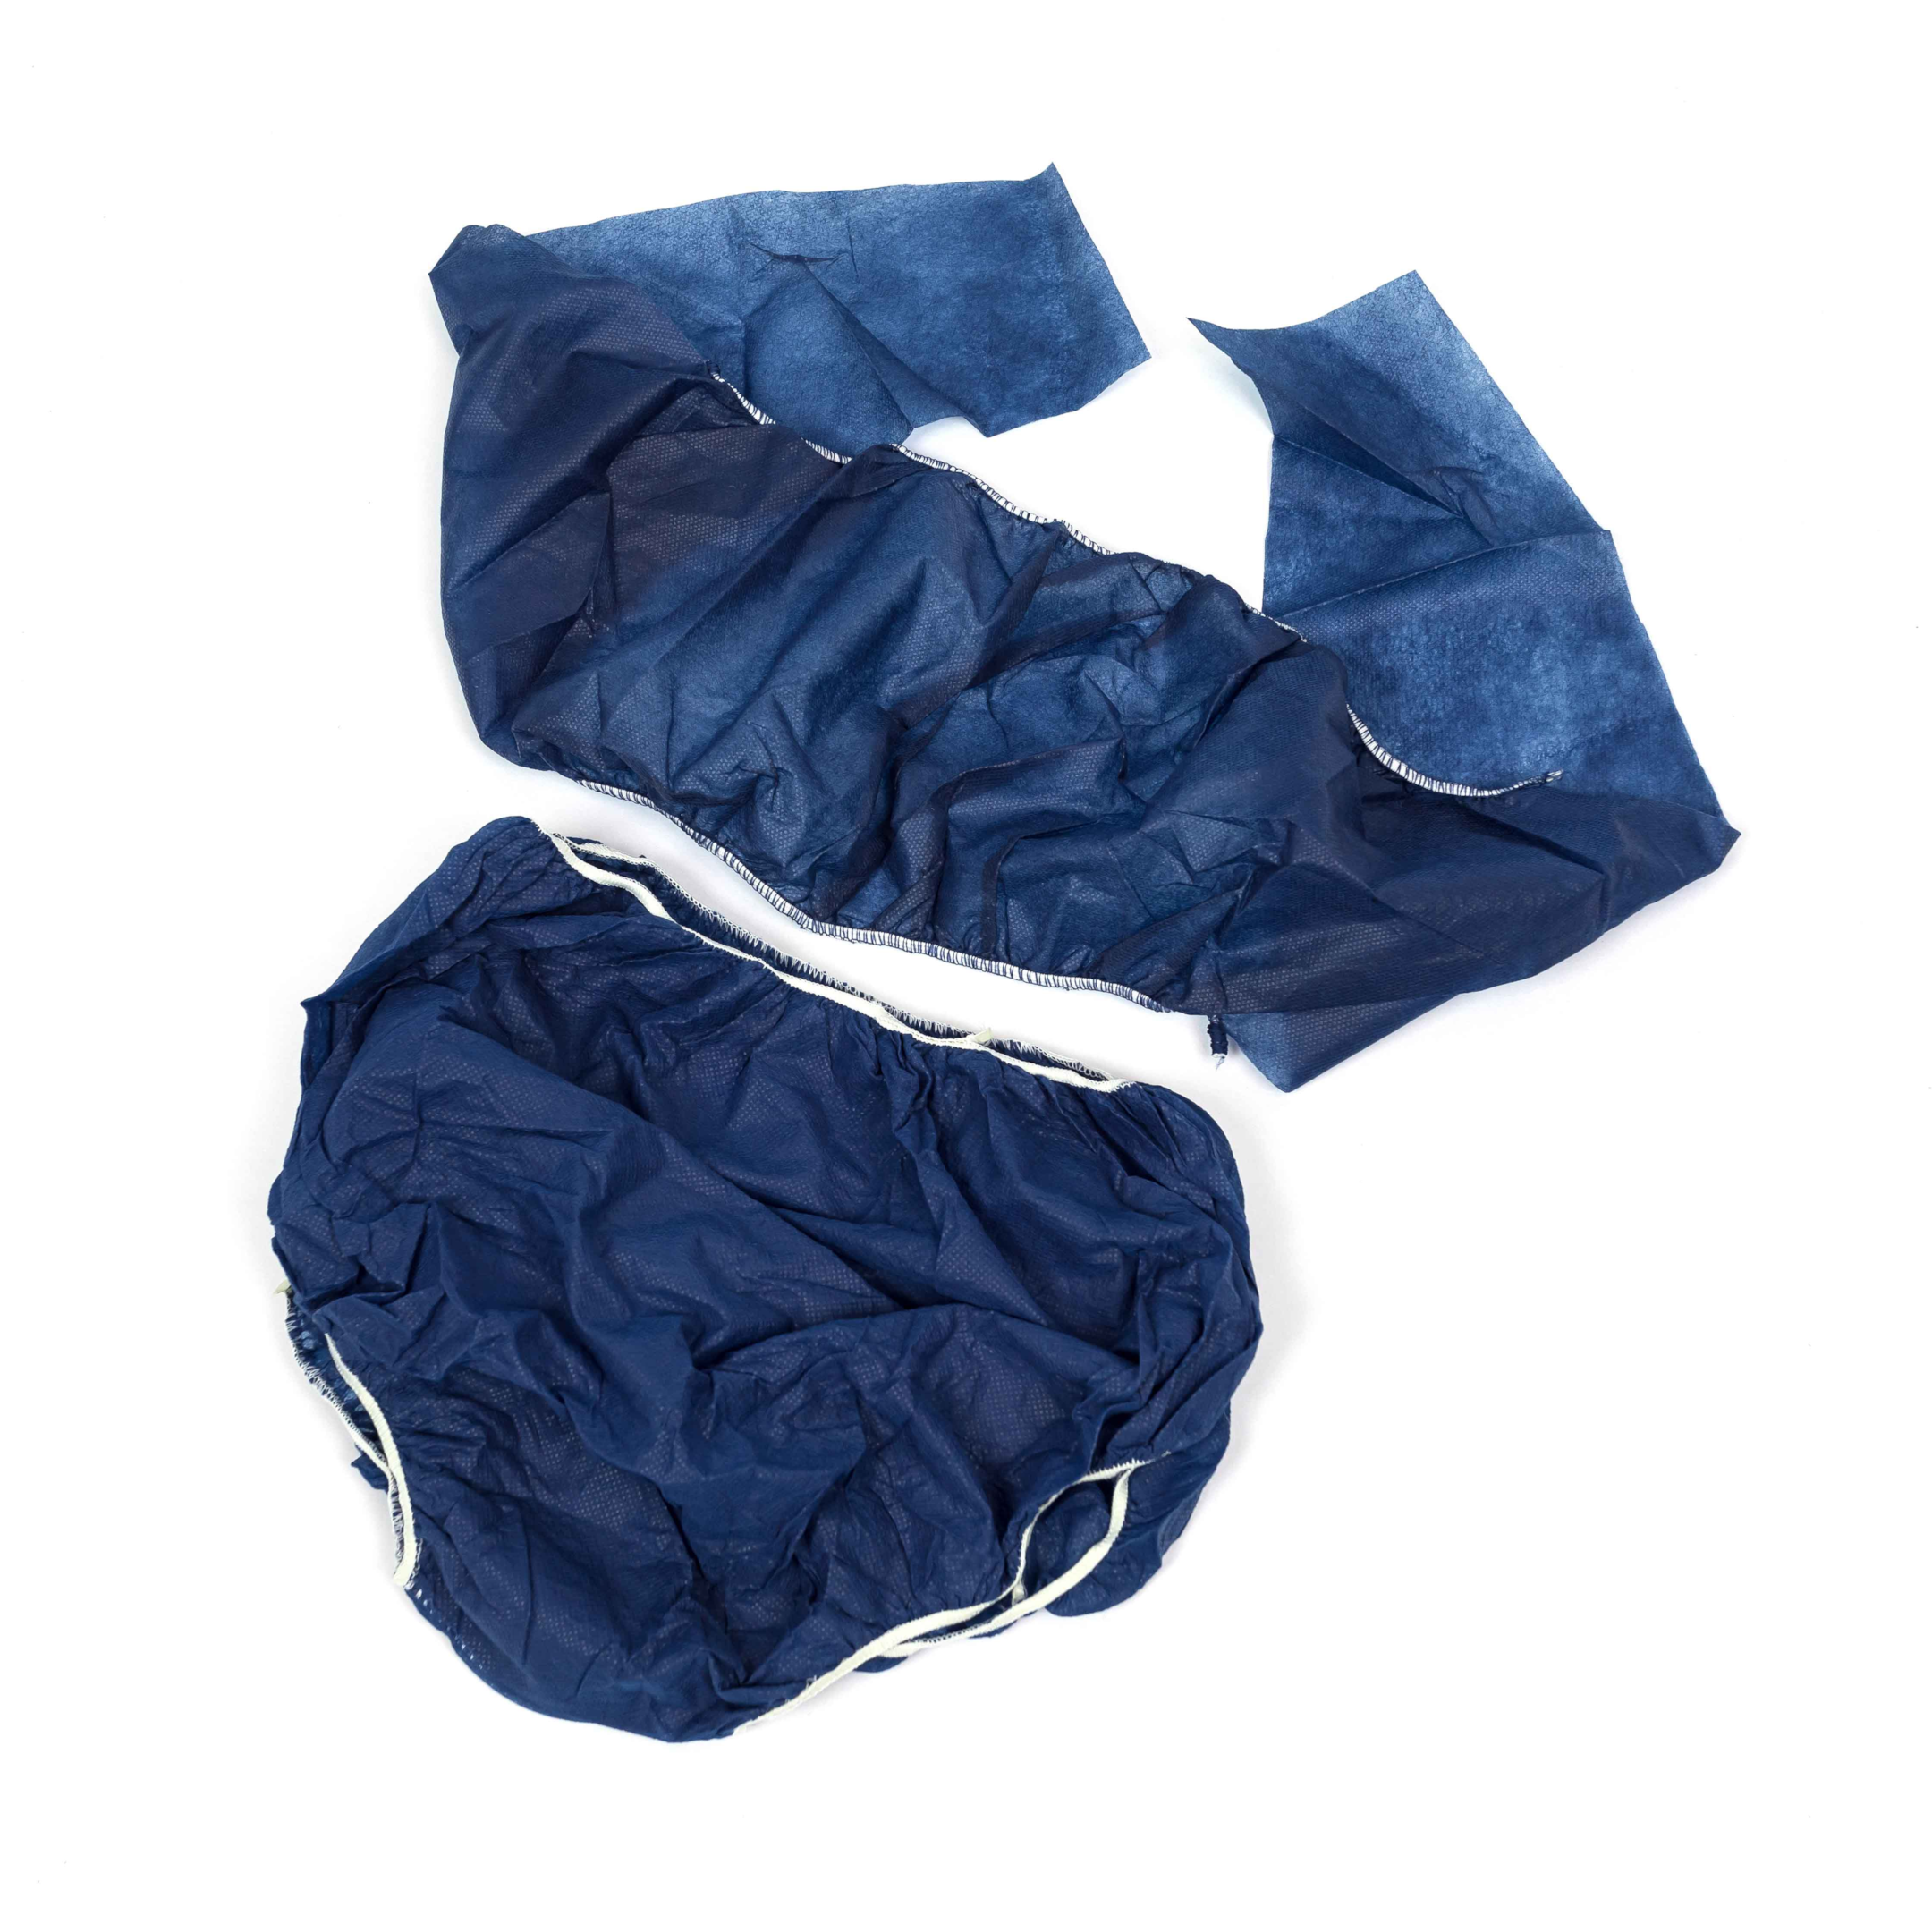 Disposable men's underwear for hospital emergencies travel briefs spas – OW- Travel